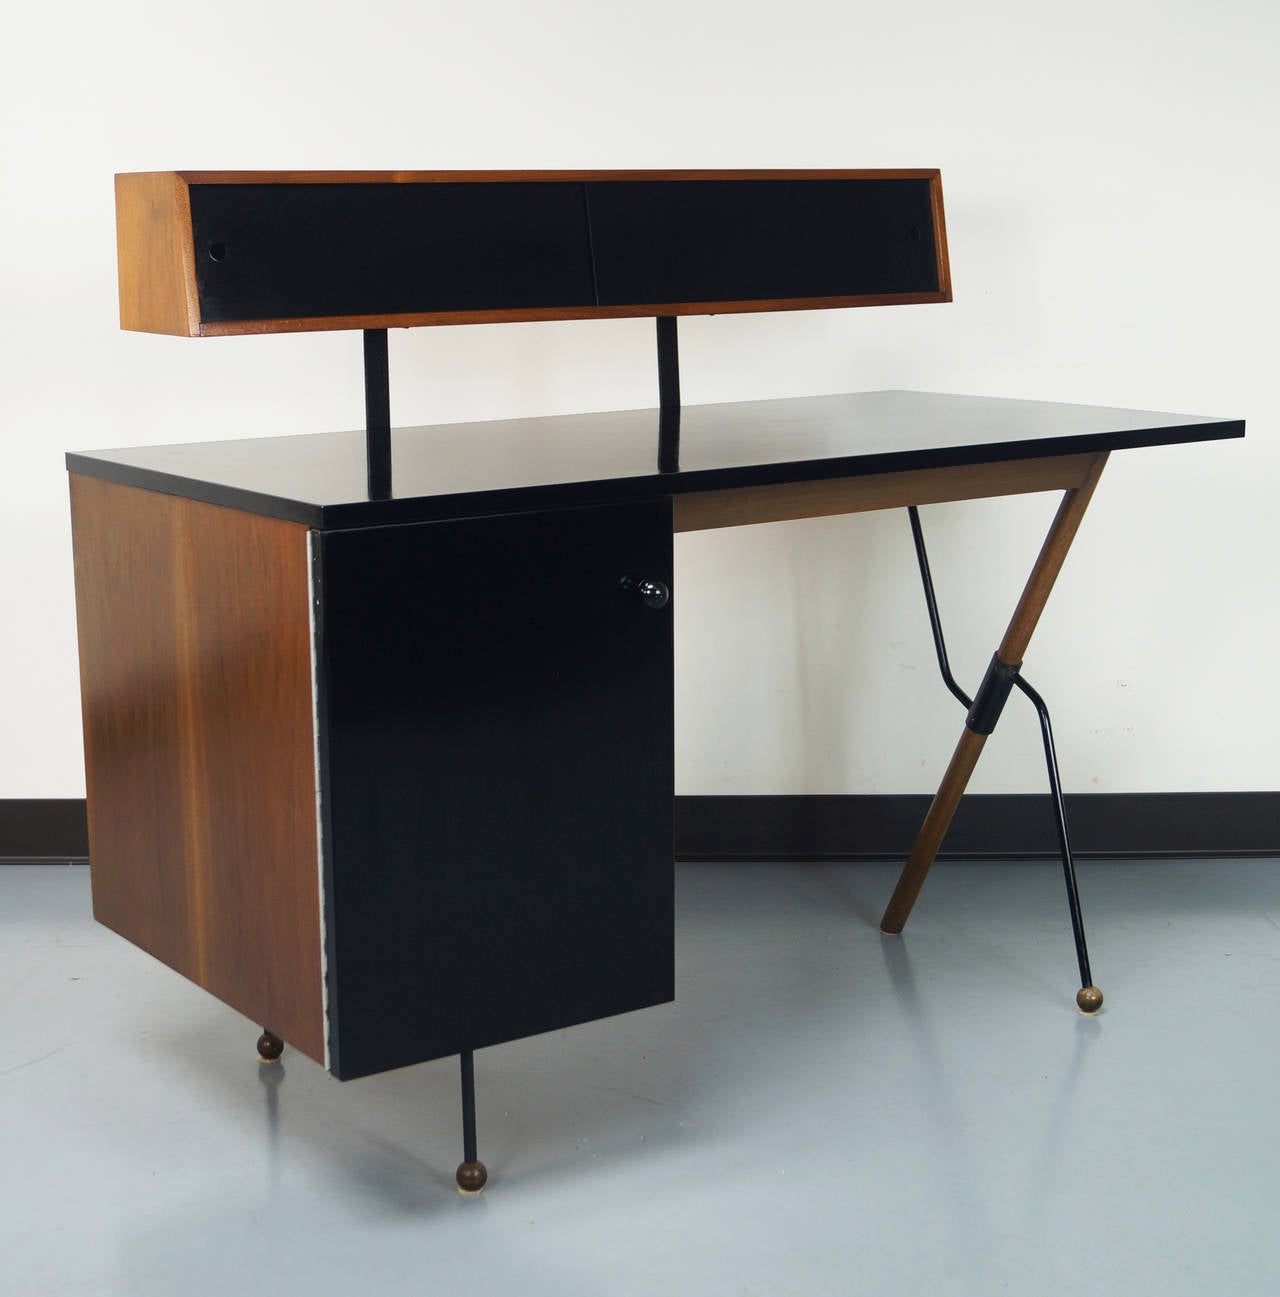 Vintage series 62 desk with a rare top storage unit designed by Greta M. Grossman for Glenn of California. Original finish. Engraved with original manufacture label.